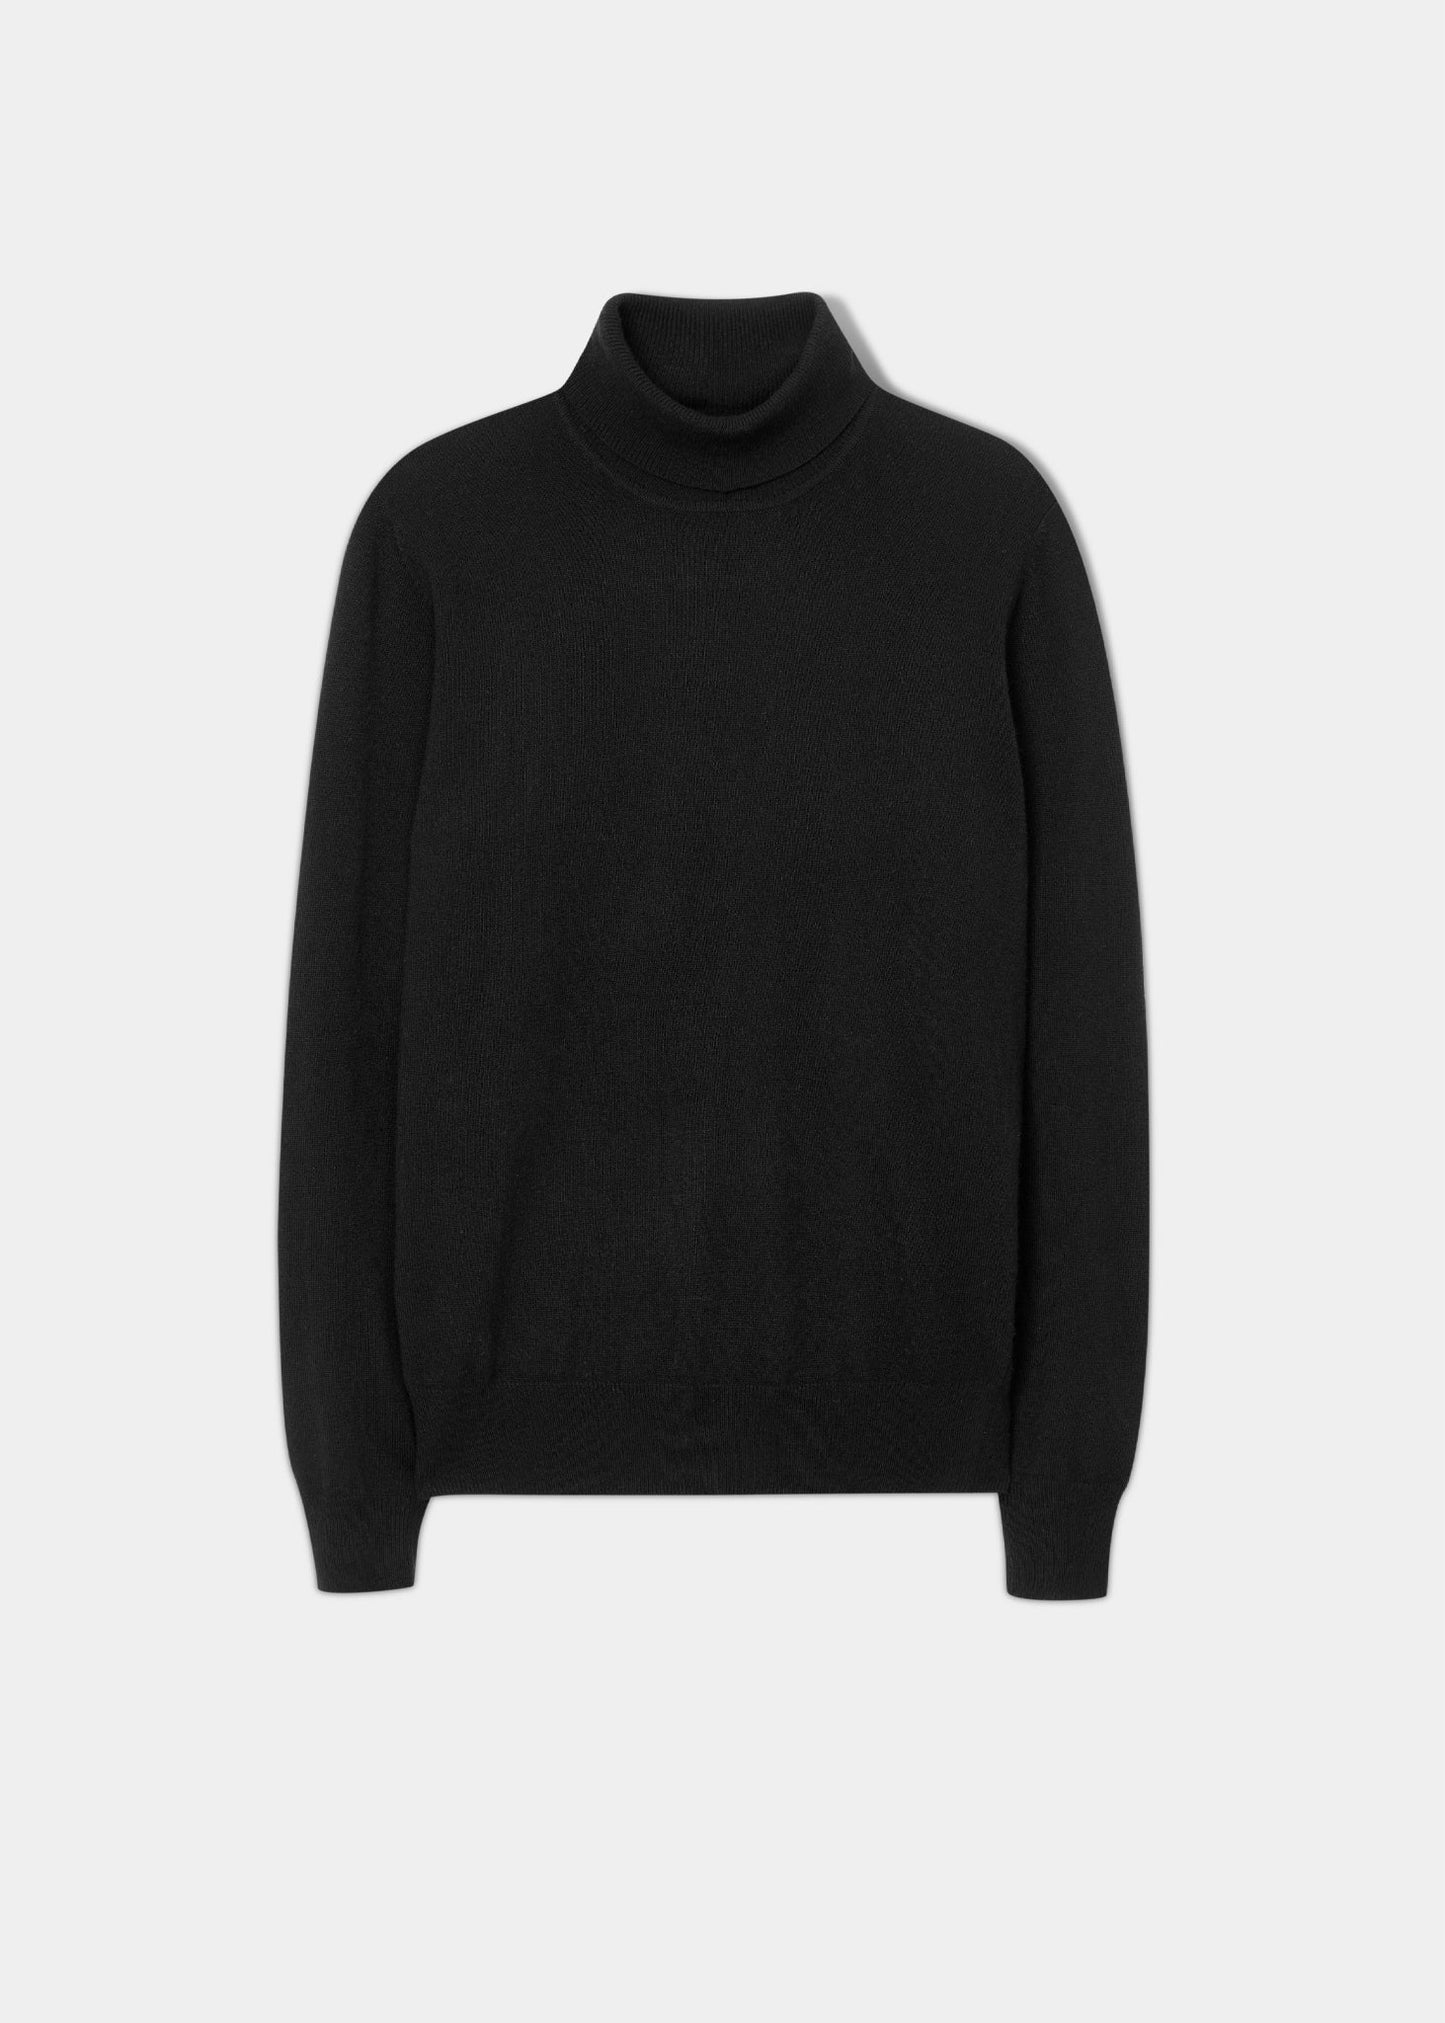 Bunbury Geelong Wool Roll Neck Sweater in Black - Regular Fit